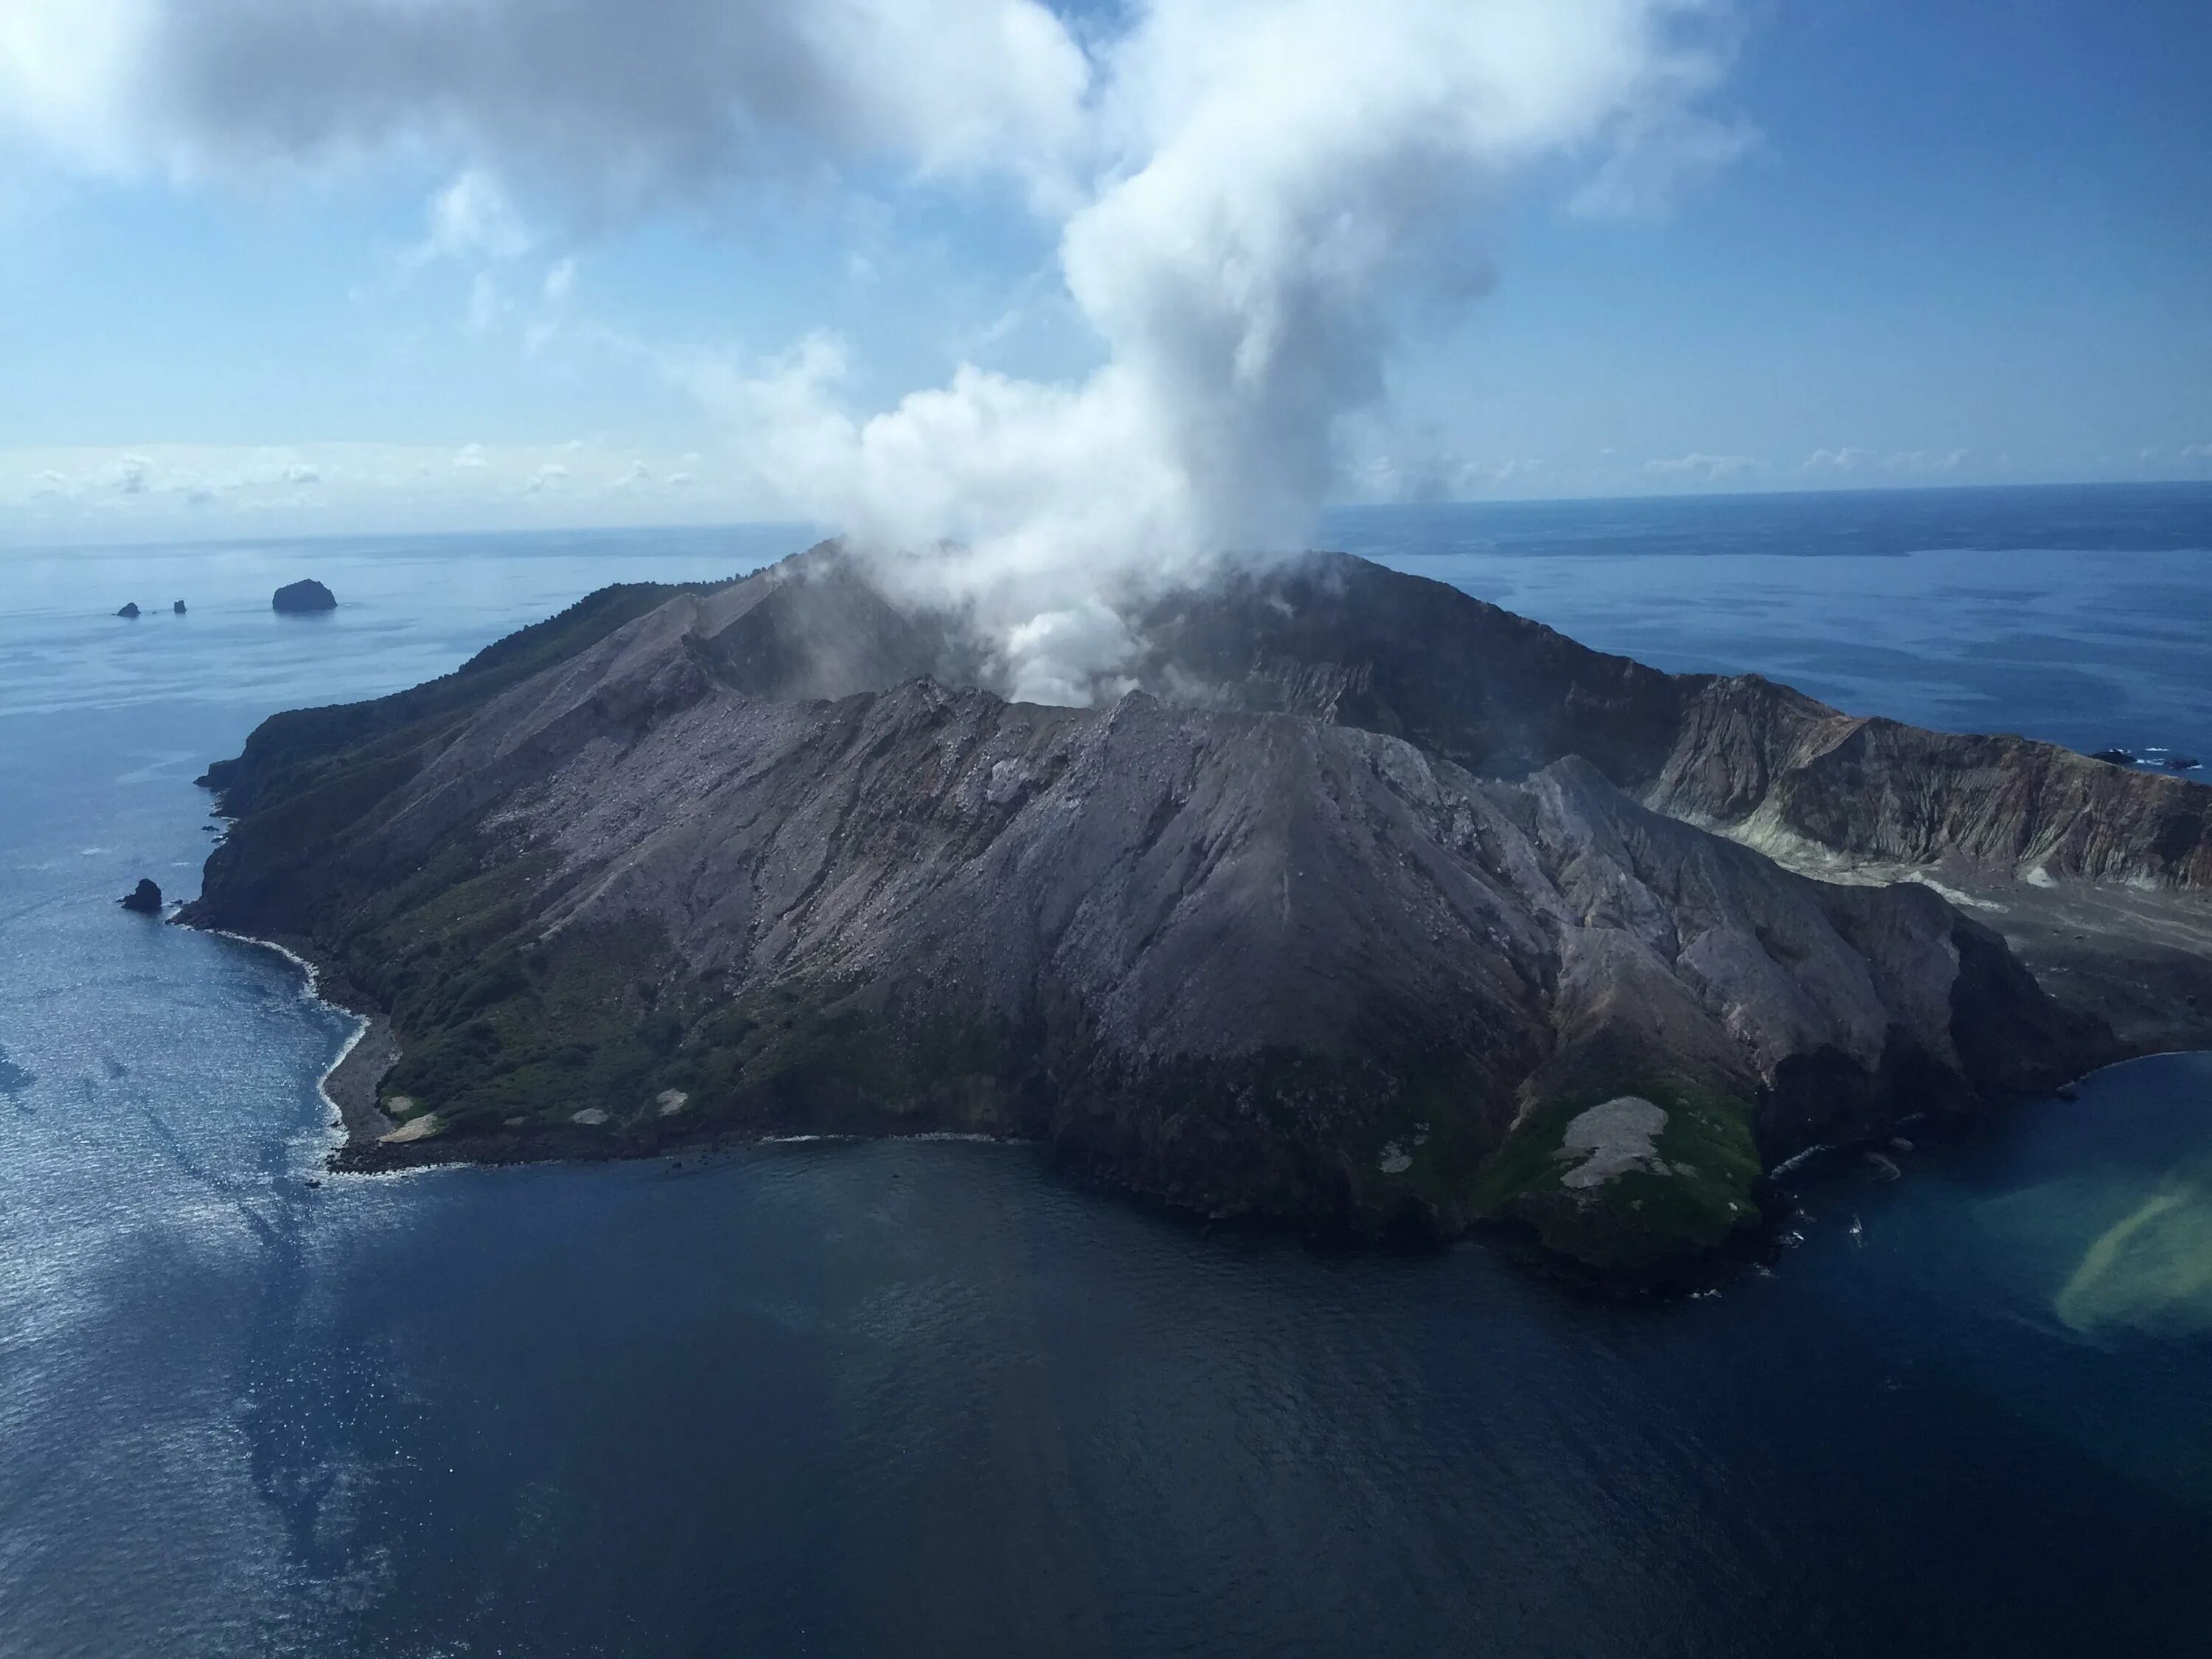 Volcano island. Вулкан Уайт-Айленд новая Зеландия. Уайт-Айленд извержение. Извержение вулкана Уайт Айленд 2019. Новая Зеландия вулканы.